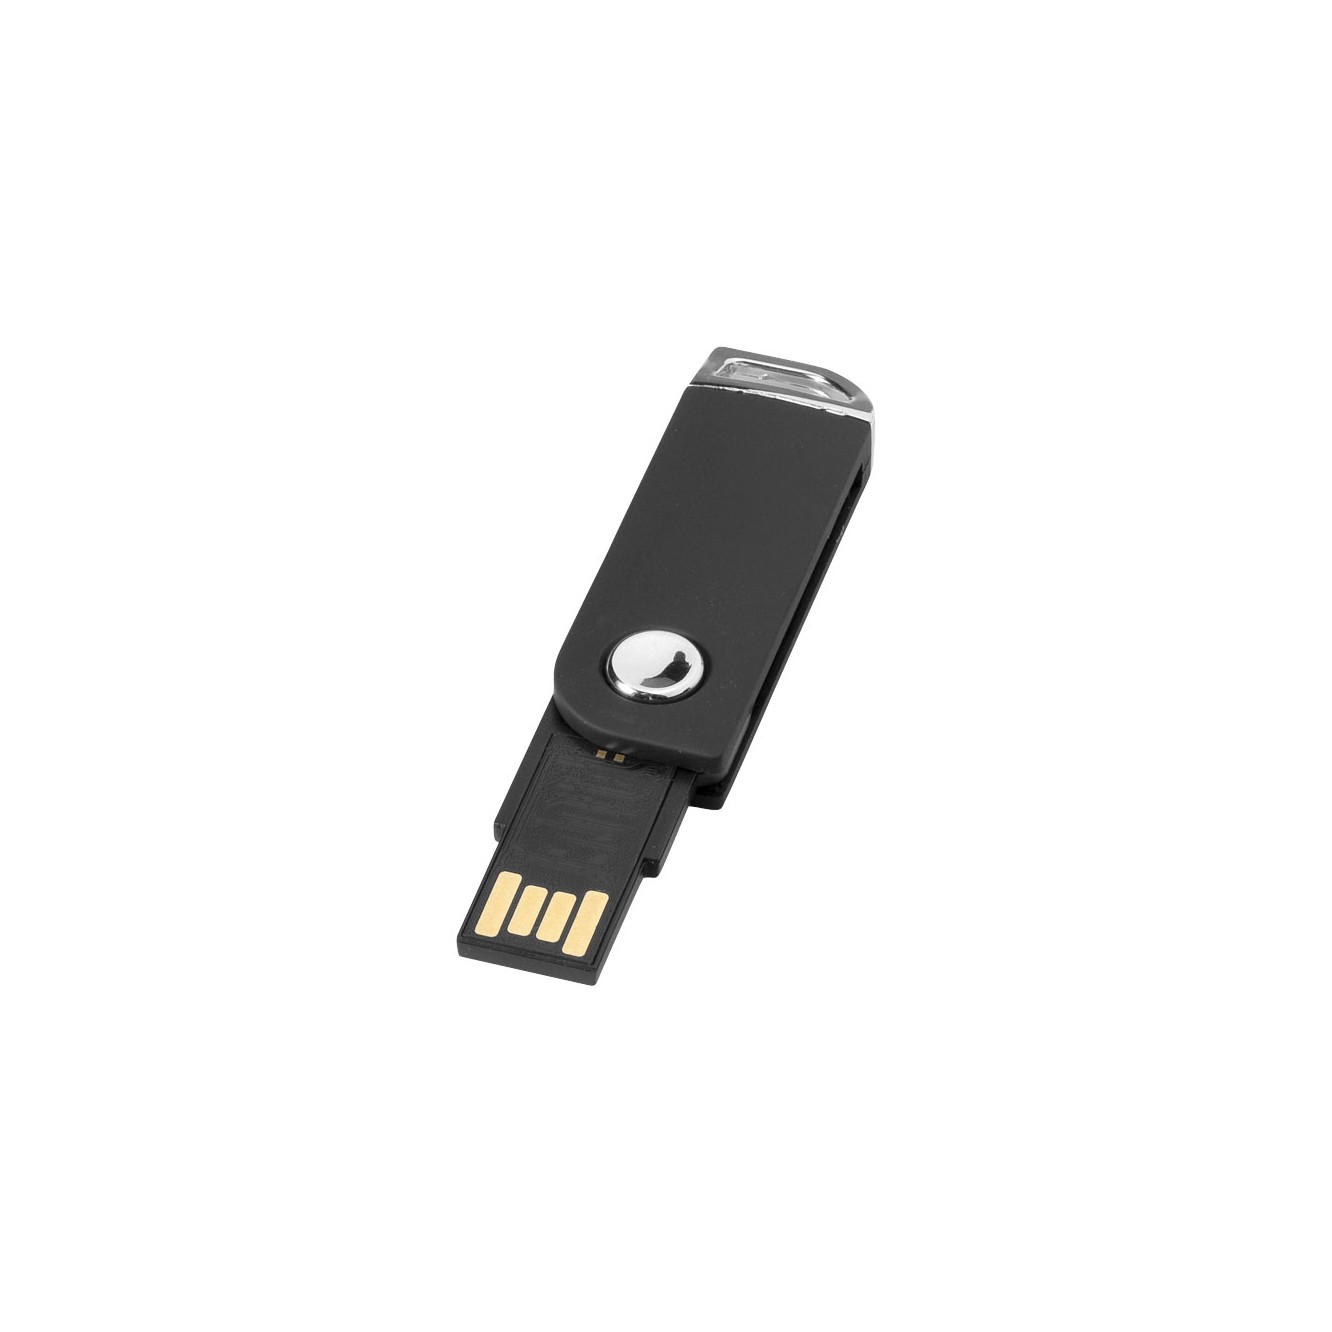 Swivel rectangular USB stick